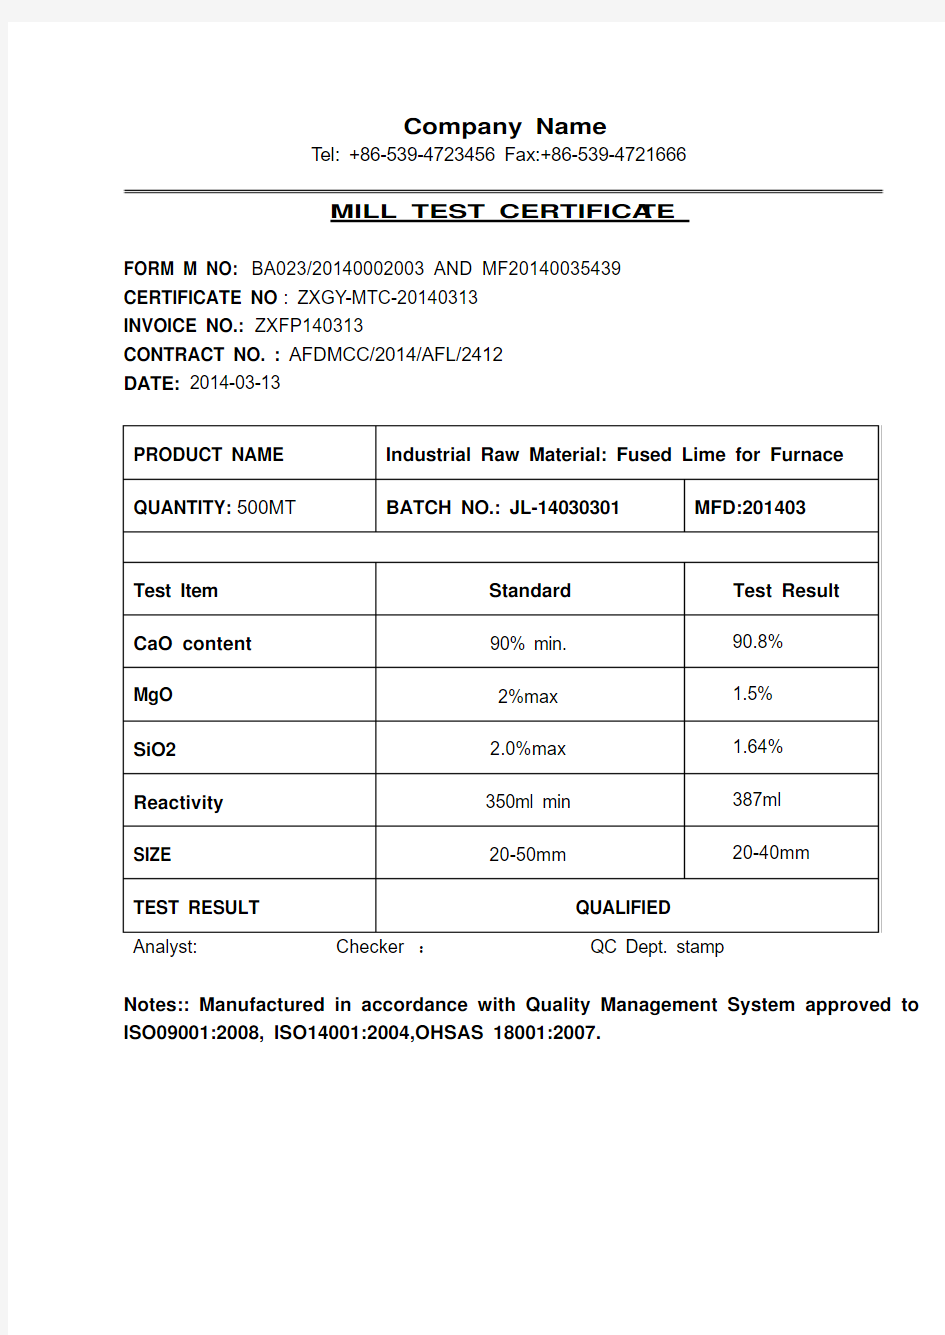 Mill Test Certificate